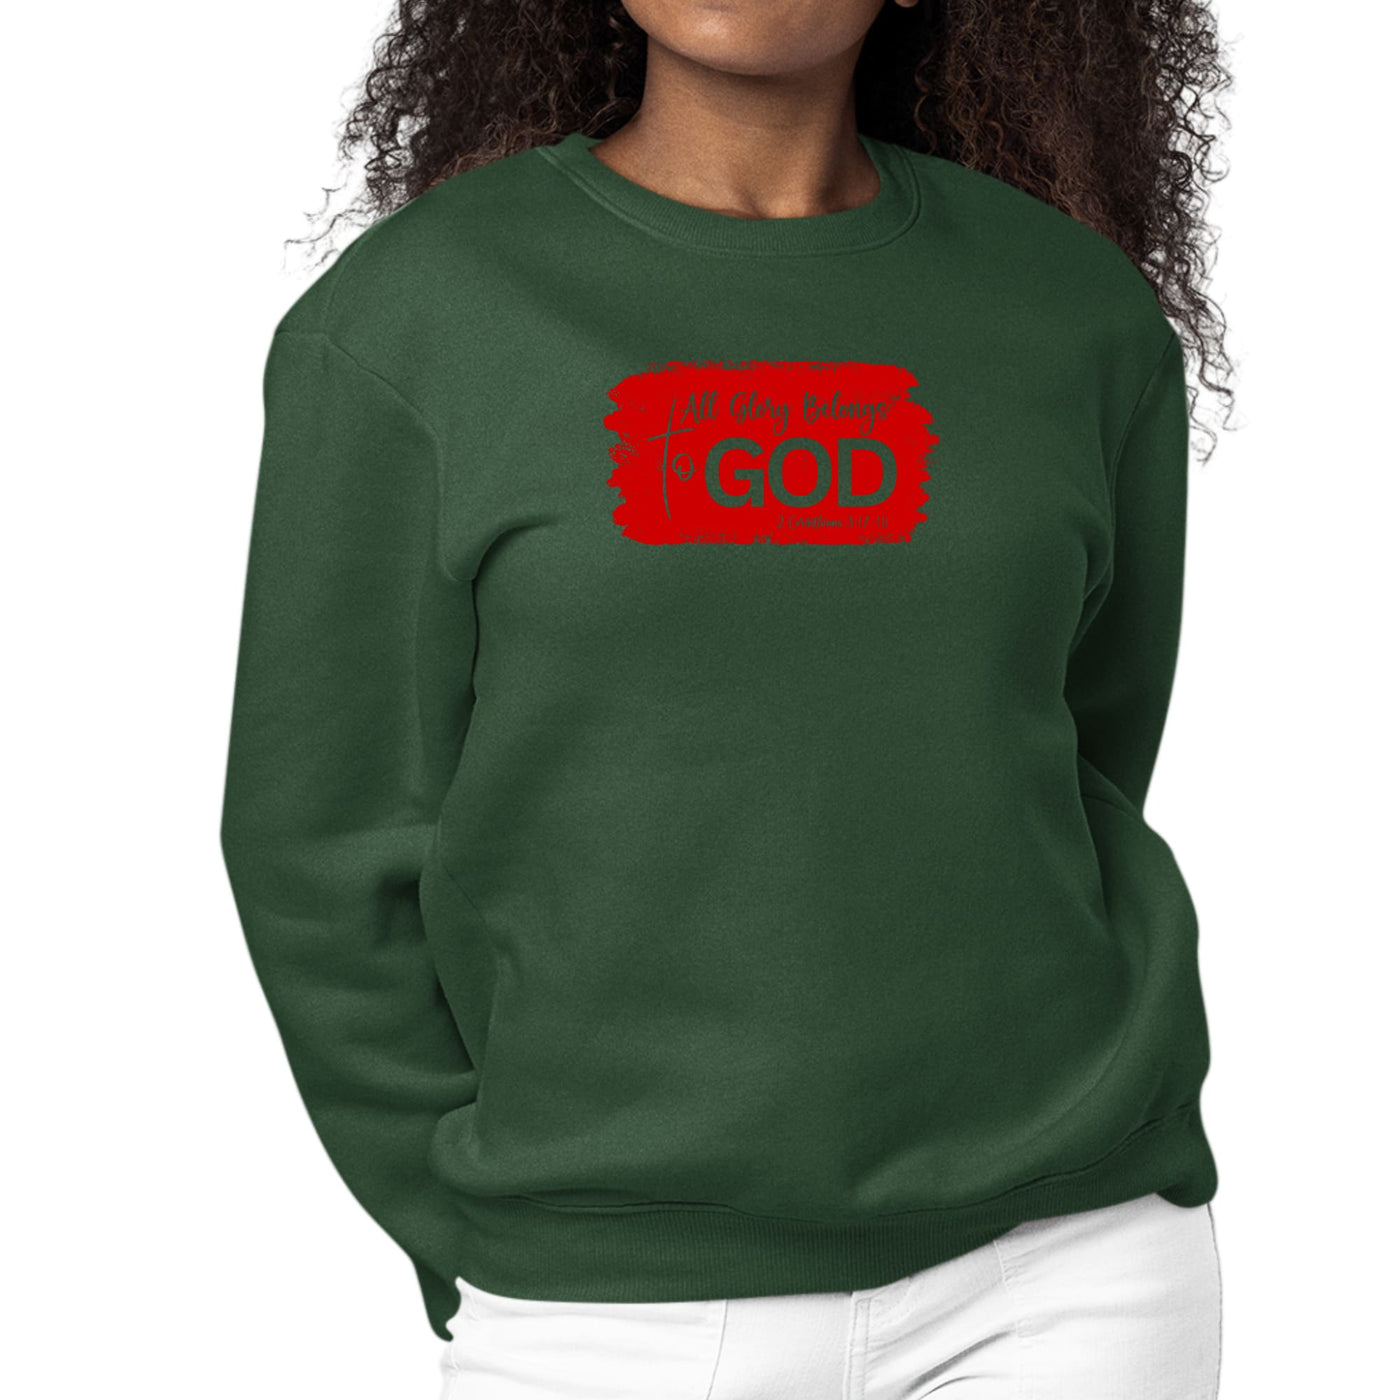 Womens Graphic Sweatshirt All Glory Belongs To God Red - Womens | Sweatshirts